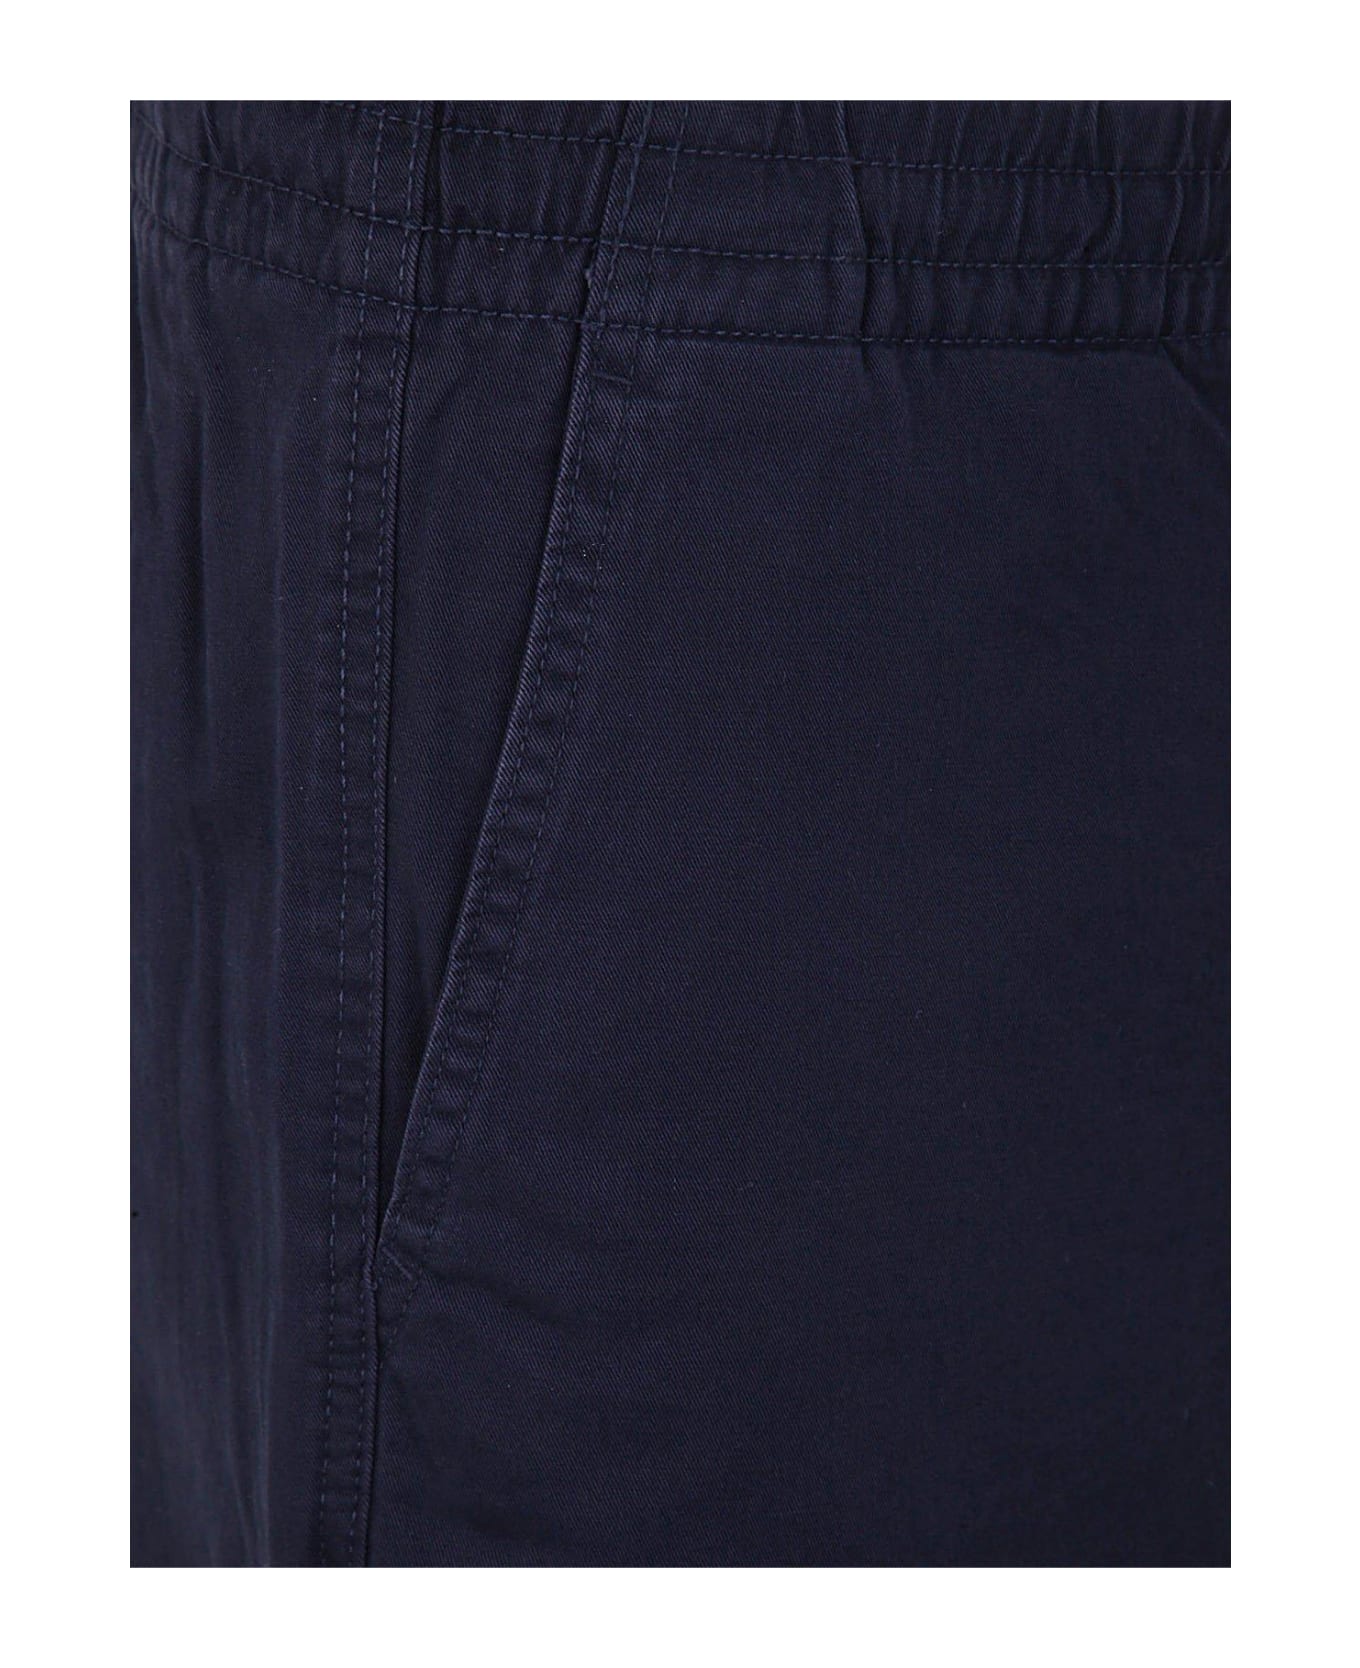 Polo Ralph Lauren Chino Shorts - Nautical Ink ショートパンツ